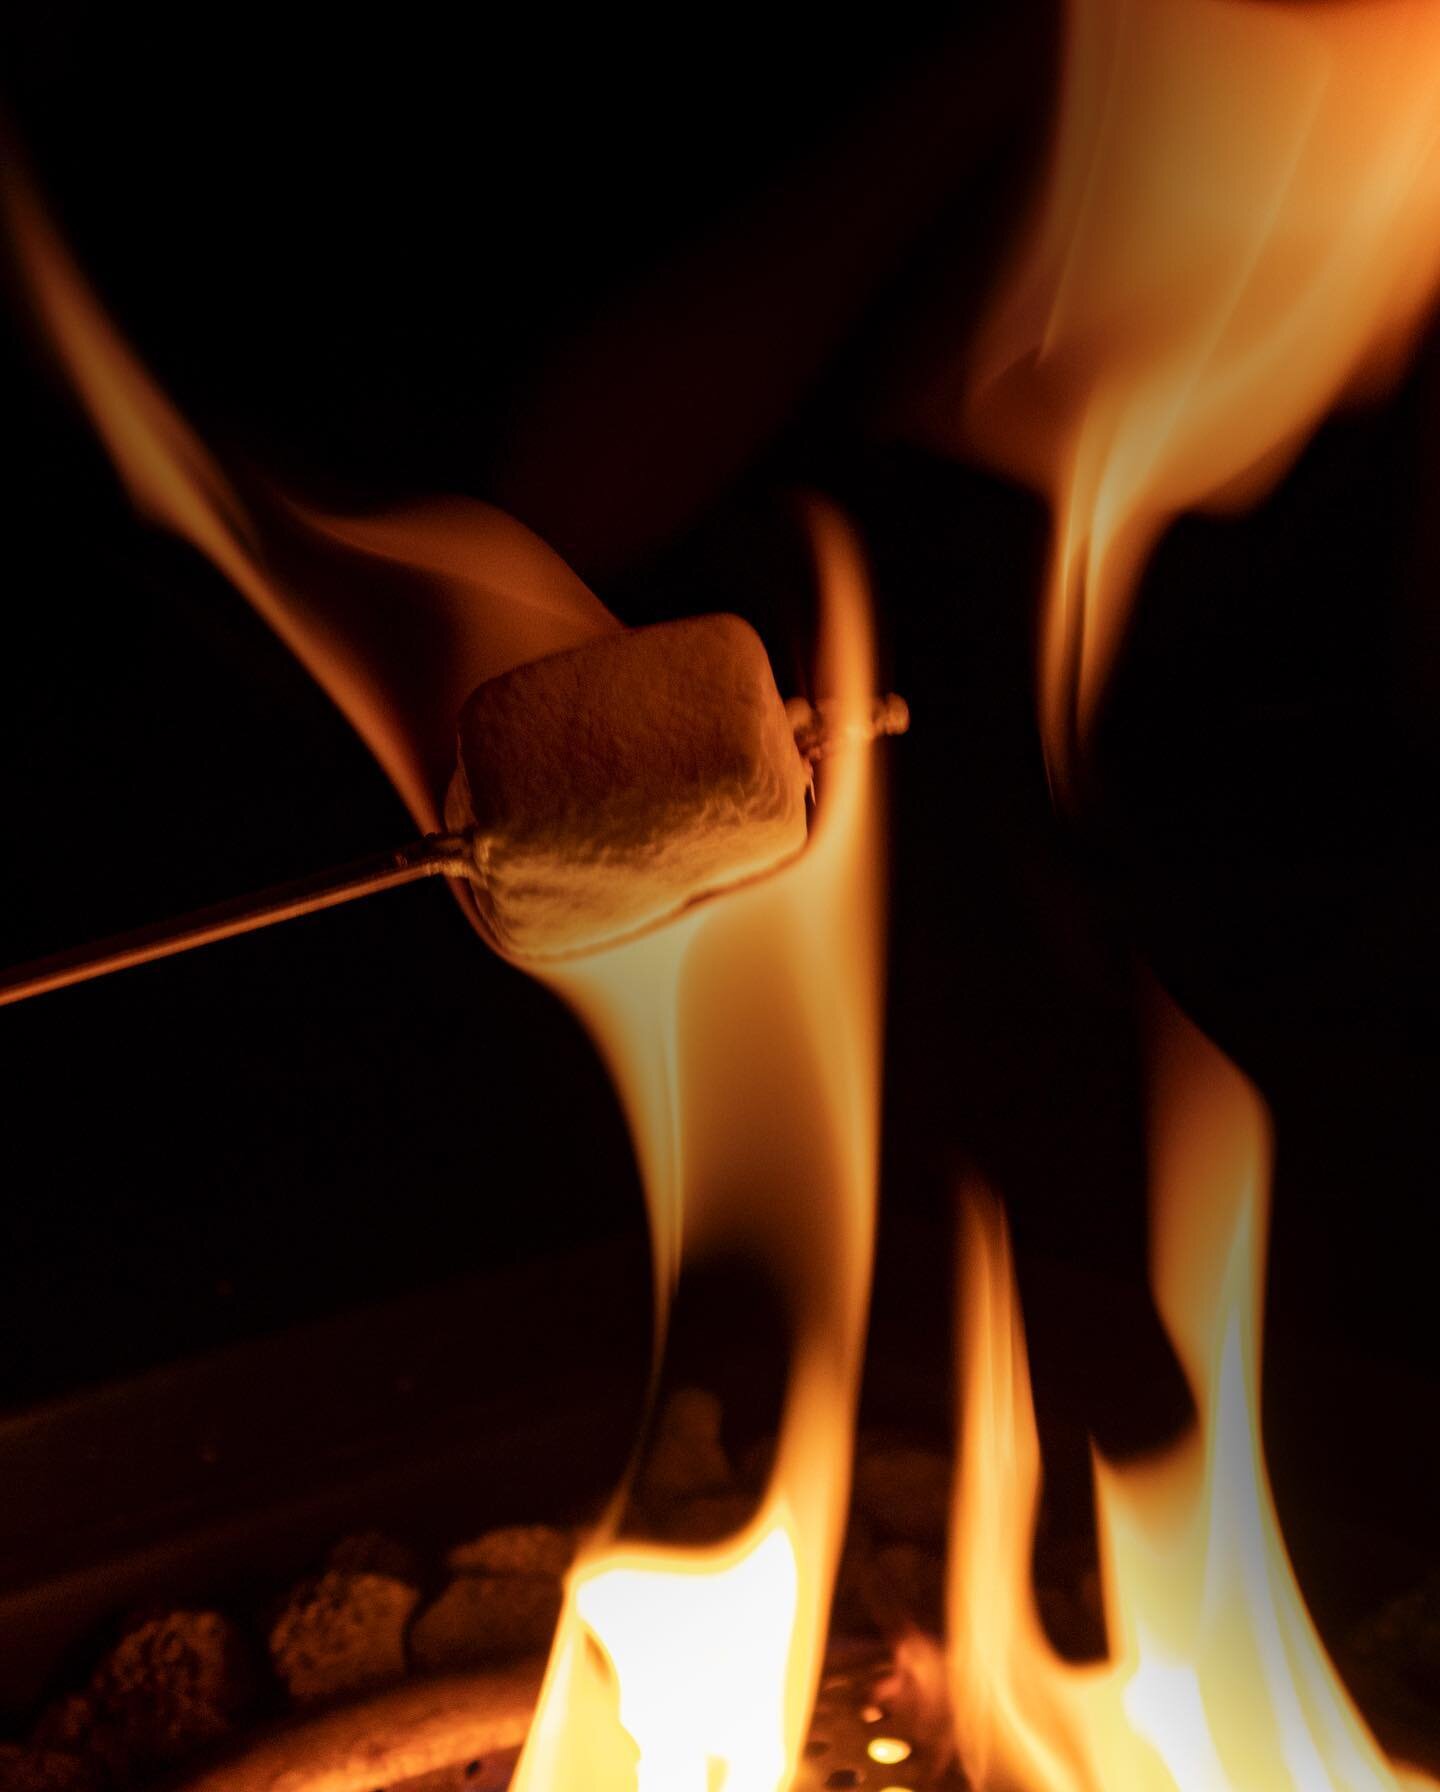 Marshmallow Nights.
#marshmallow #fire #summertime #summerevening #relax #relaxing #firepit #chestercountypa #chestercountyphotographer